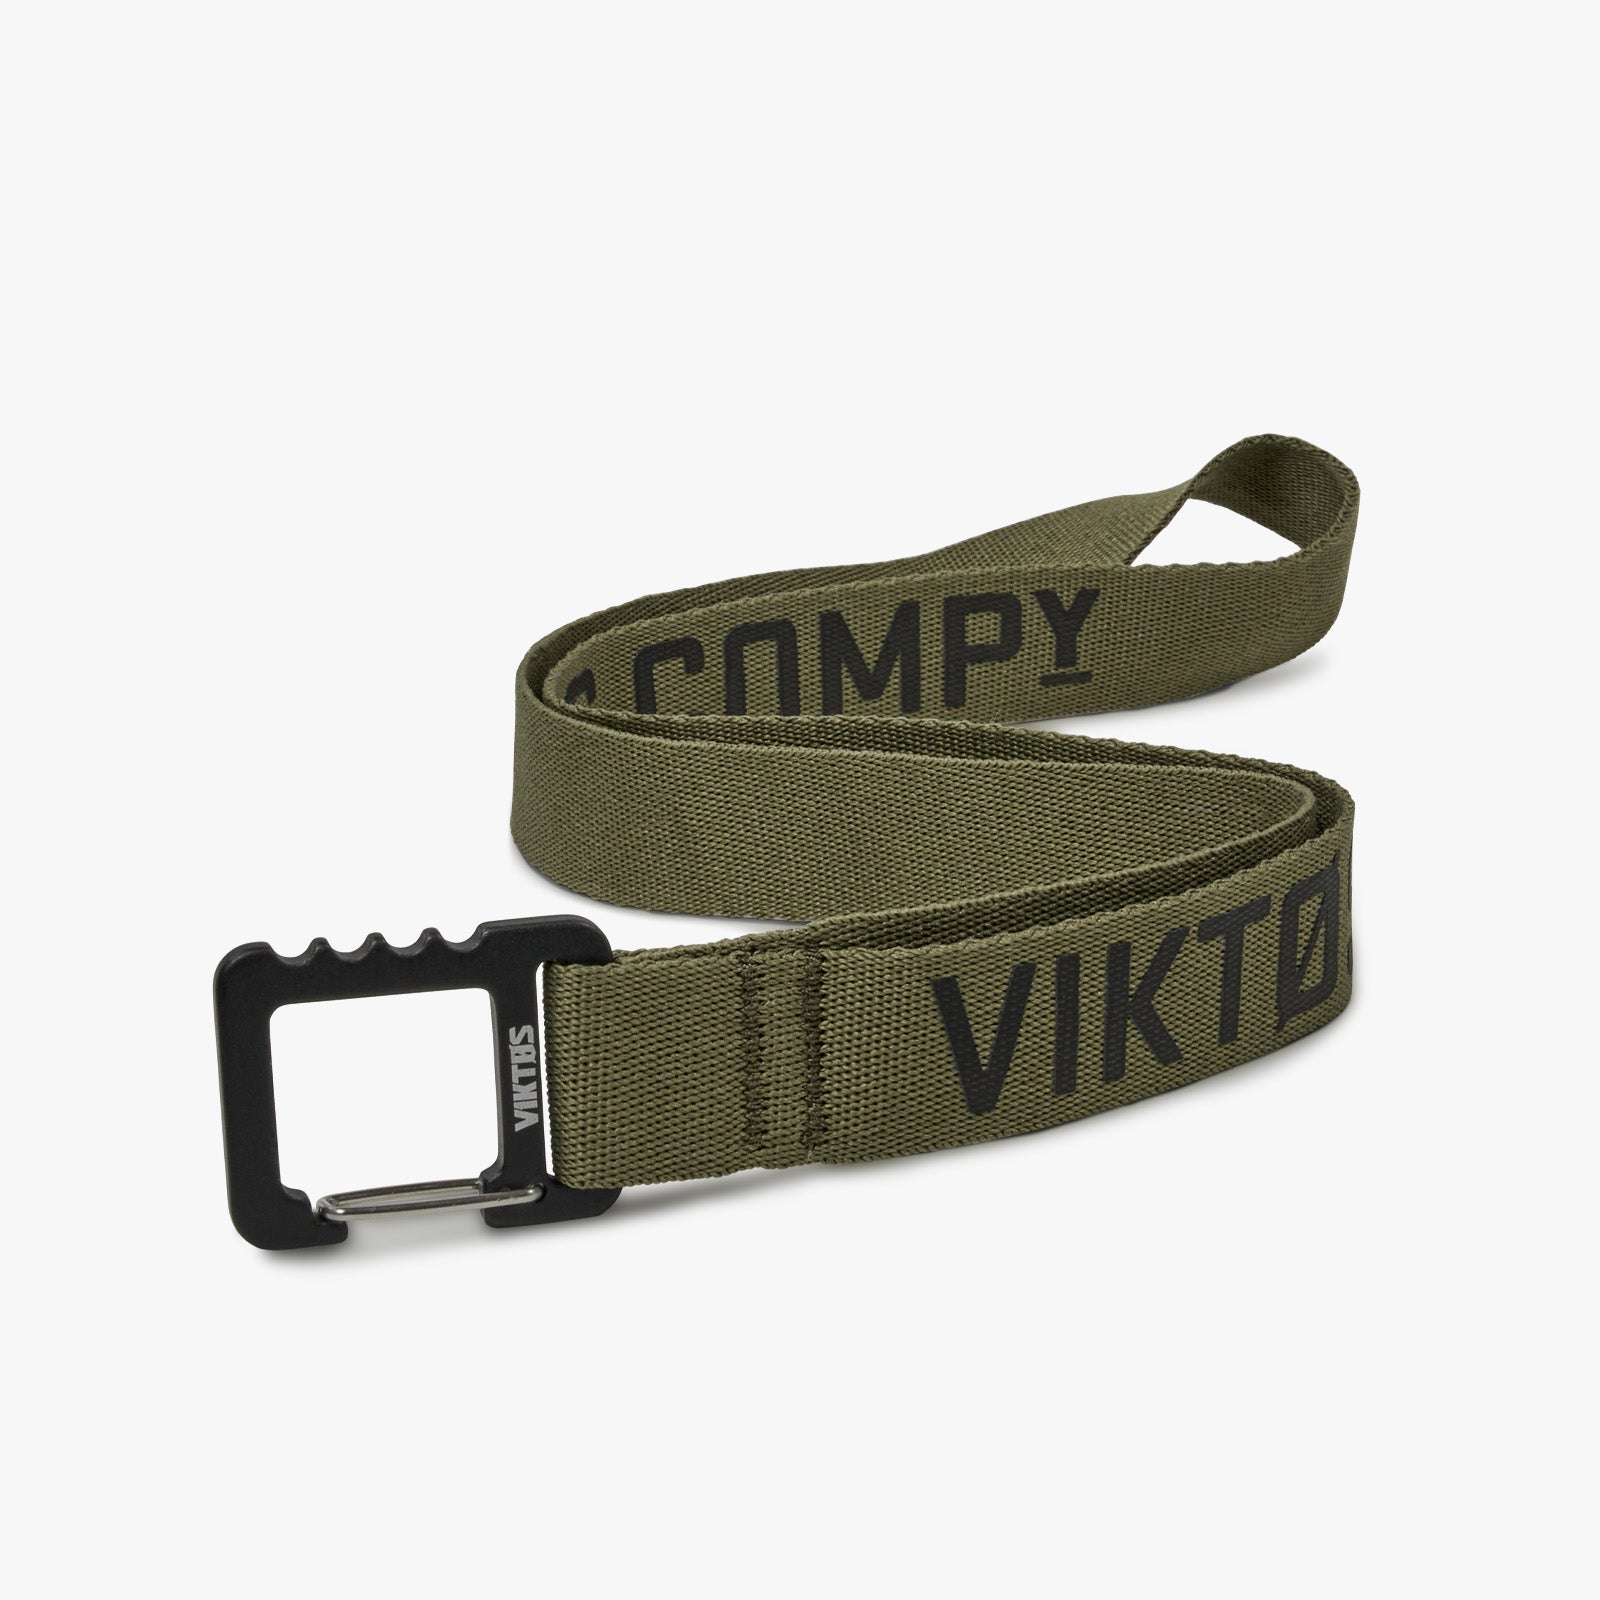 VIKTOS Springlock Lanyard Accessories VIKTOS Tactical Gear Supplier Tactical Distributors Australia